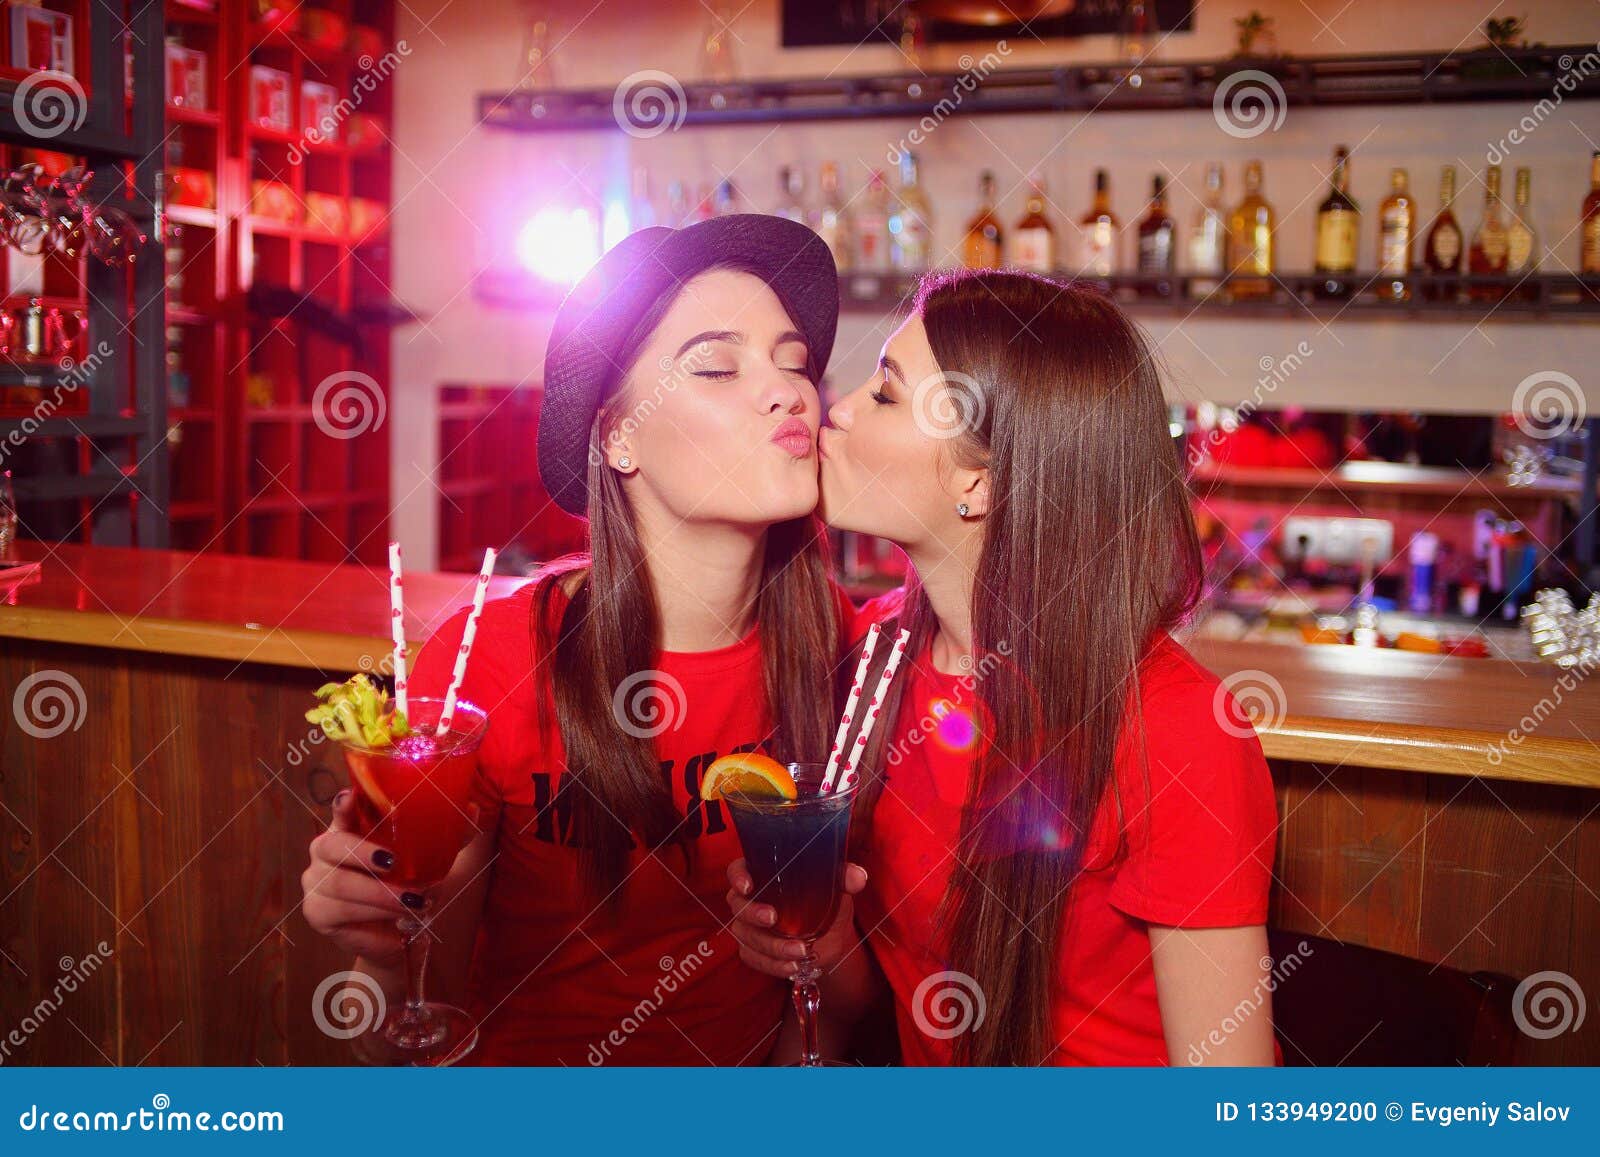 party club lesbian kiss